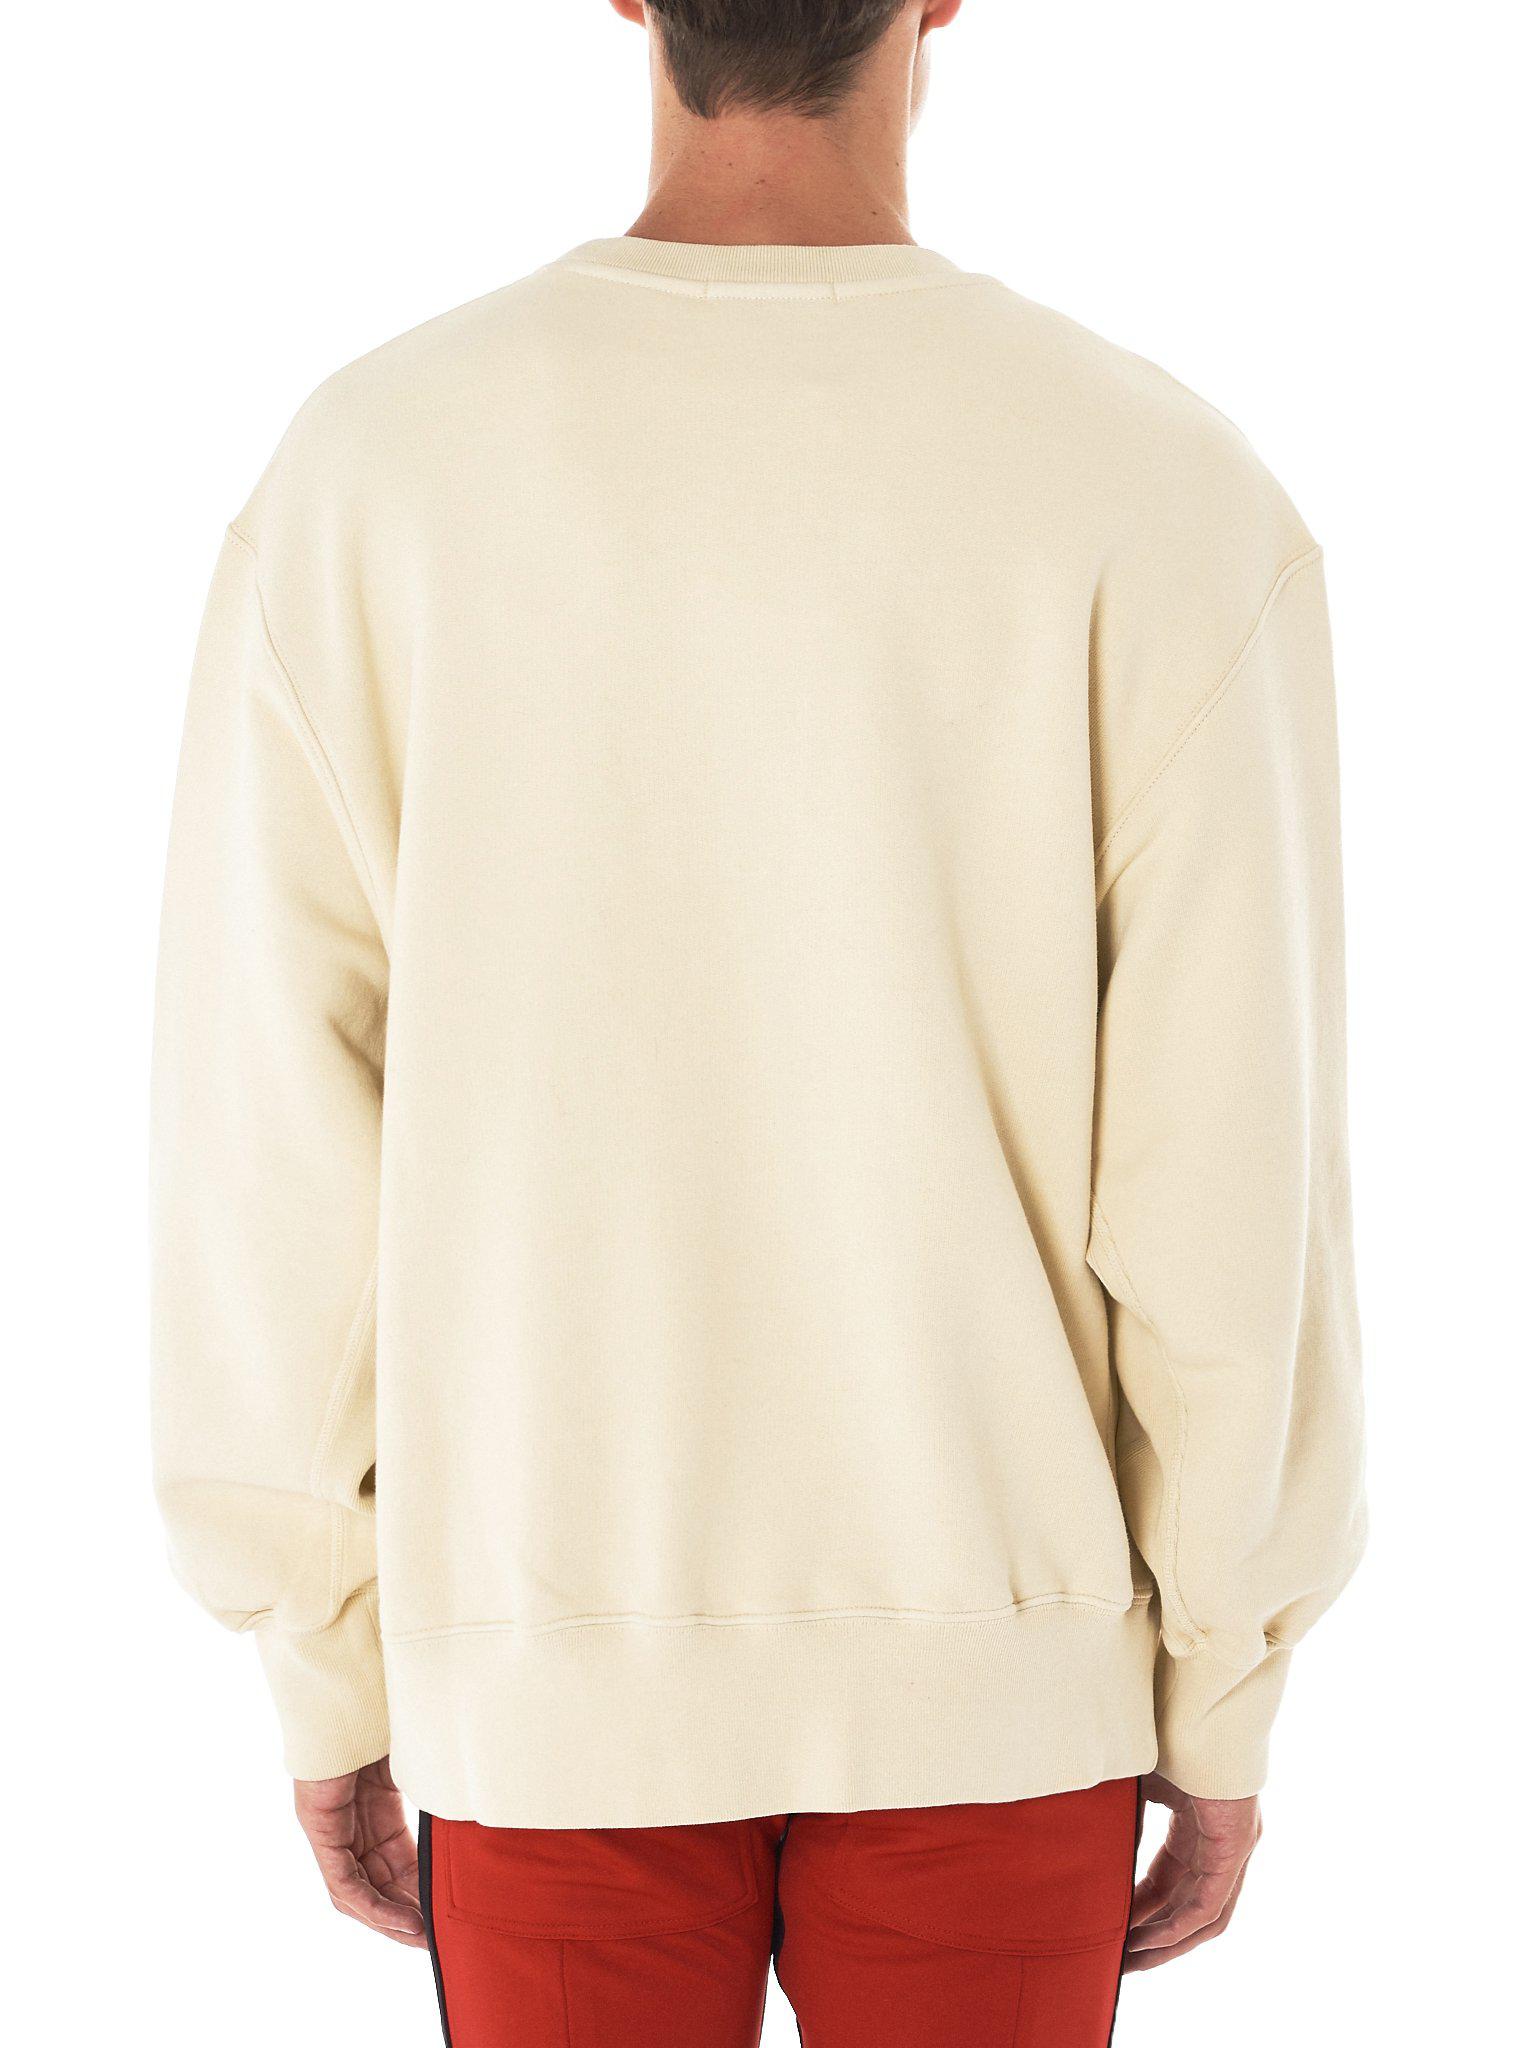 Yeezy Cotton Calabasas Adidas Sweatshirt in Natural for Men - Lyst